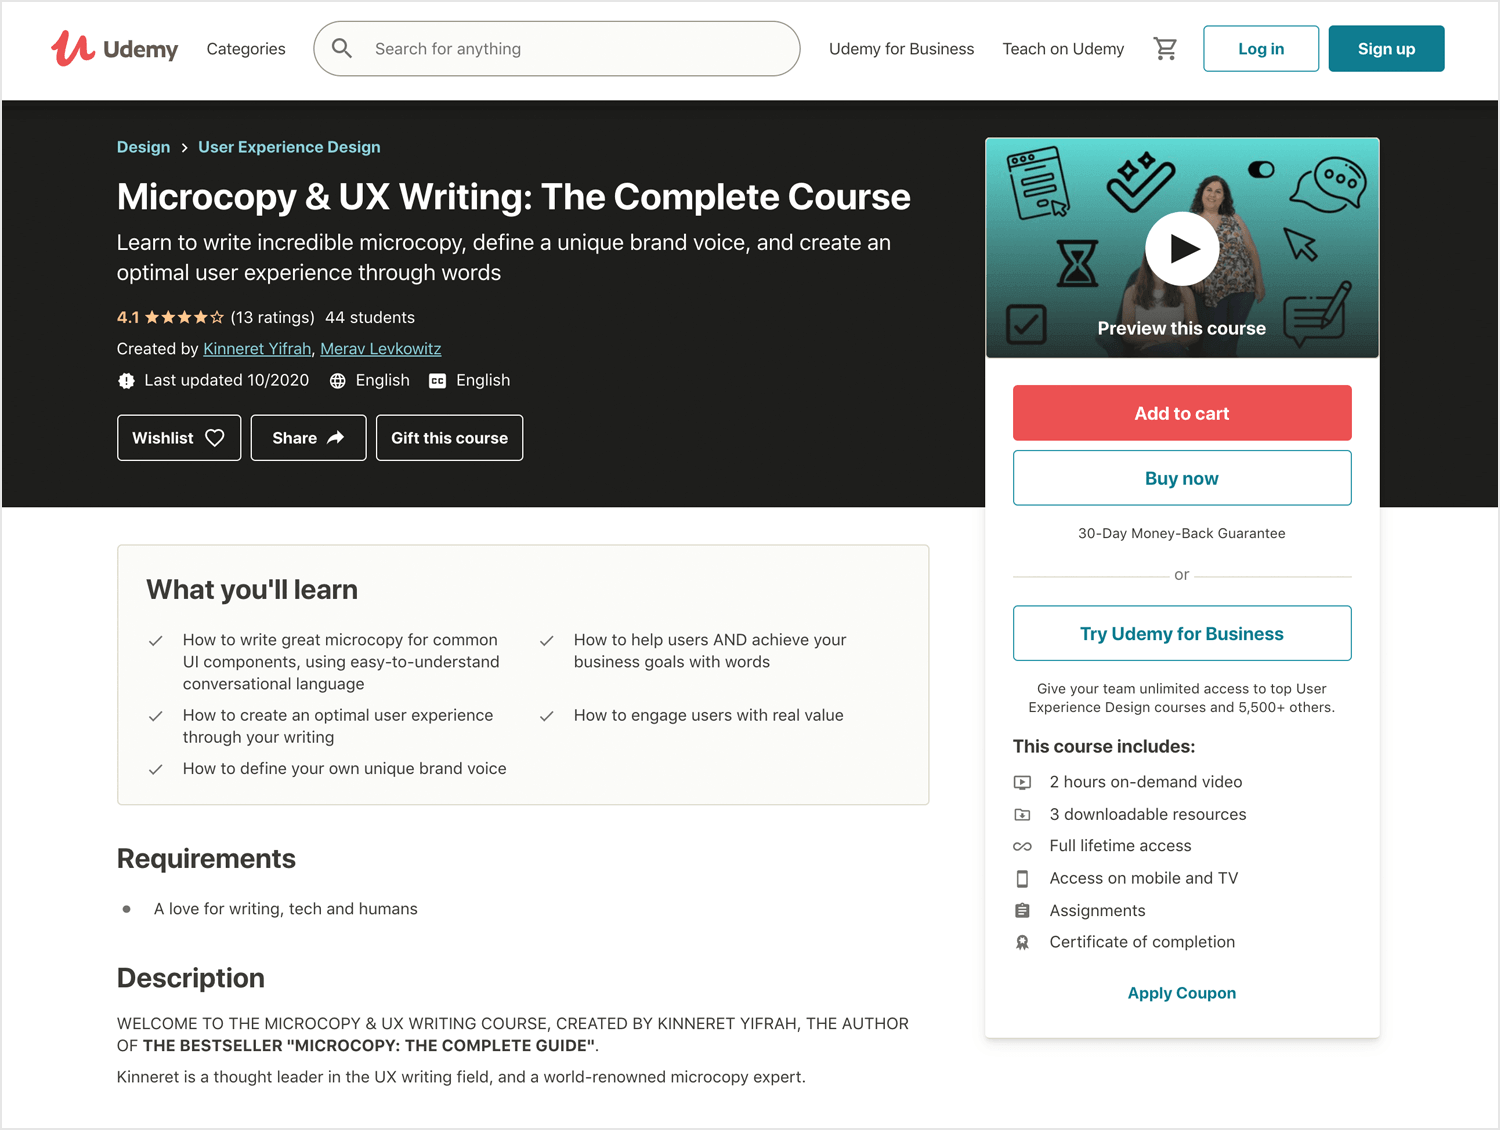 Microcopy & UX Writing course